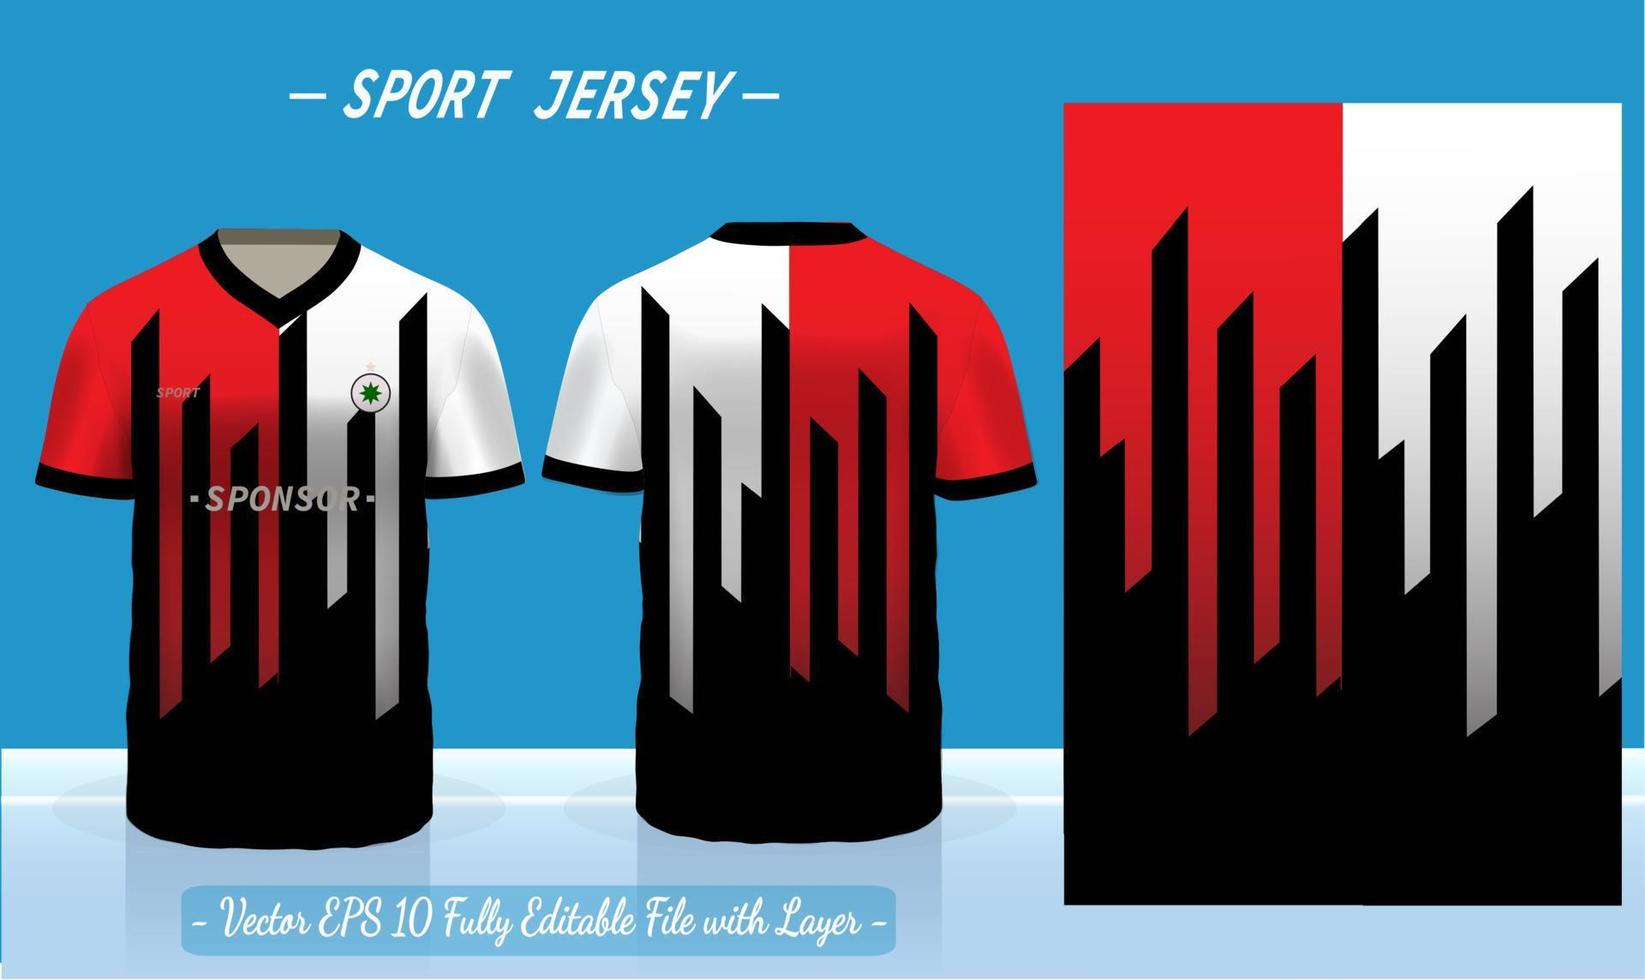 camisa esportiva e modelo de camiseta maquete de vetor de design de camisa esportiva. design esportivo para futebol, badminton, corrida, camisa de jogos